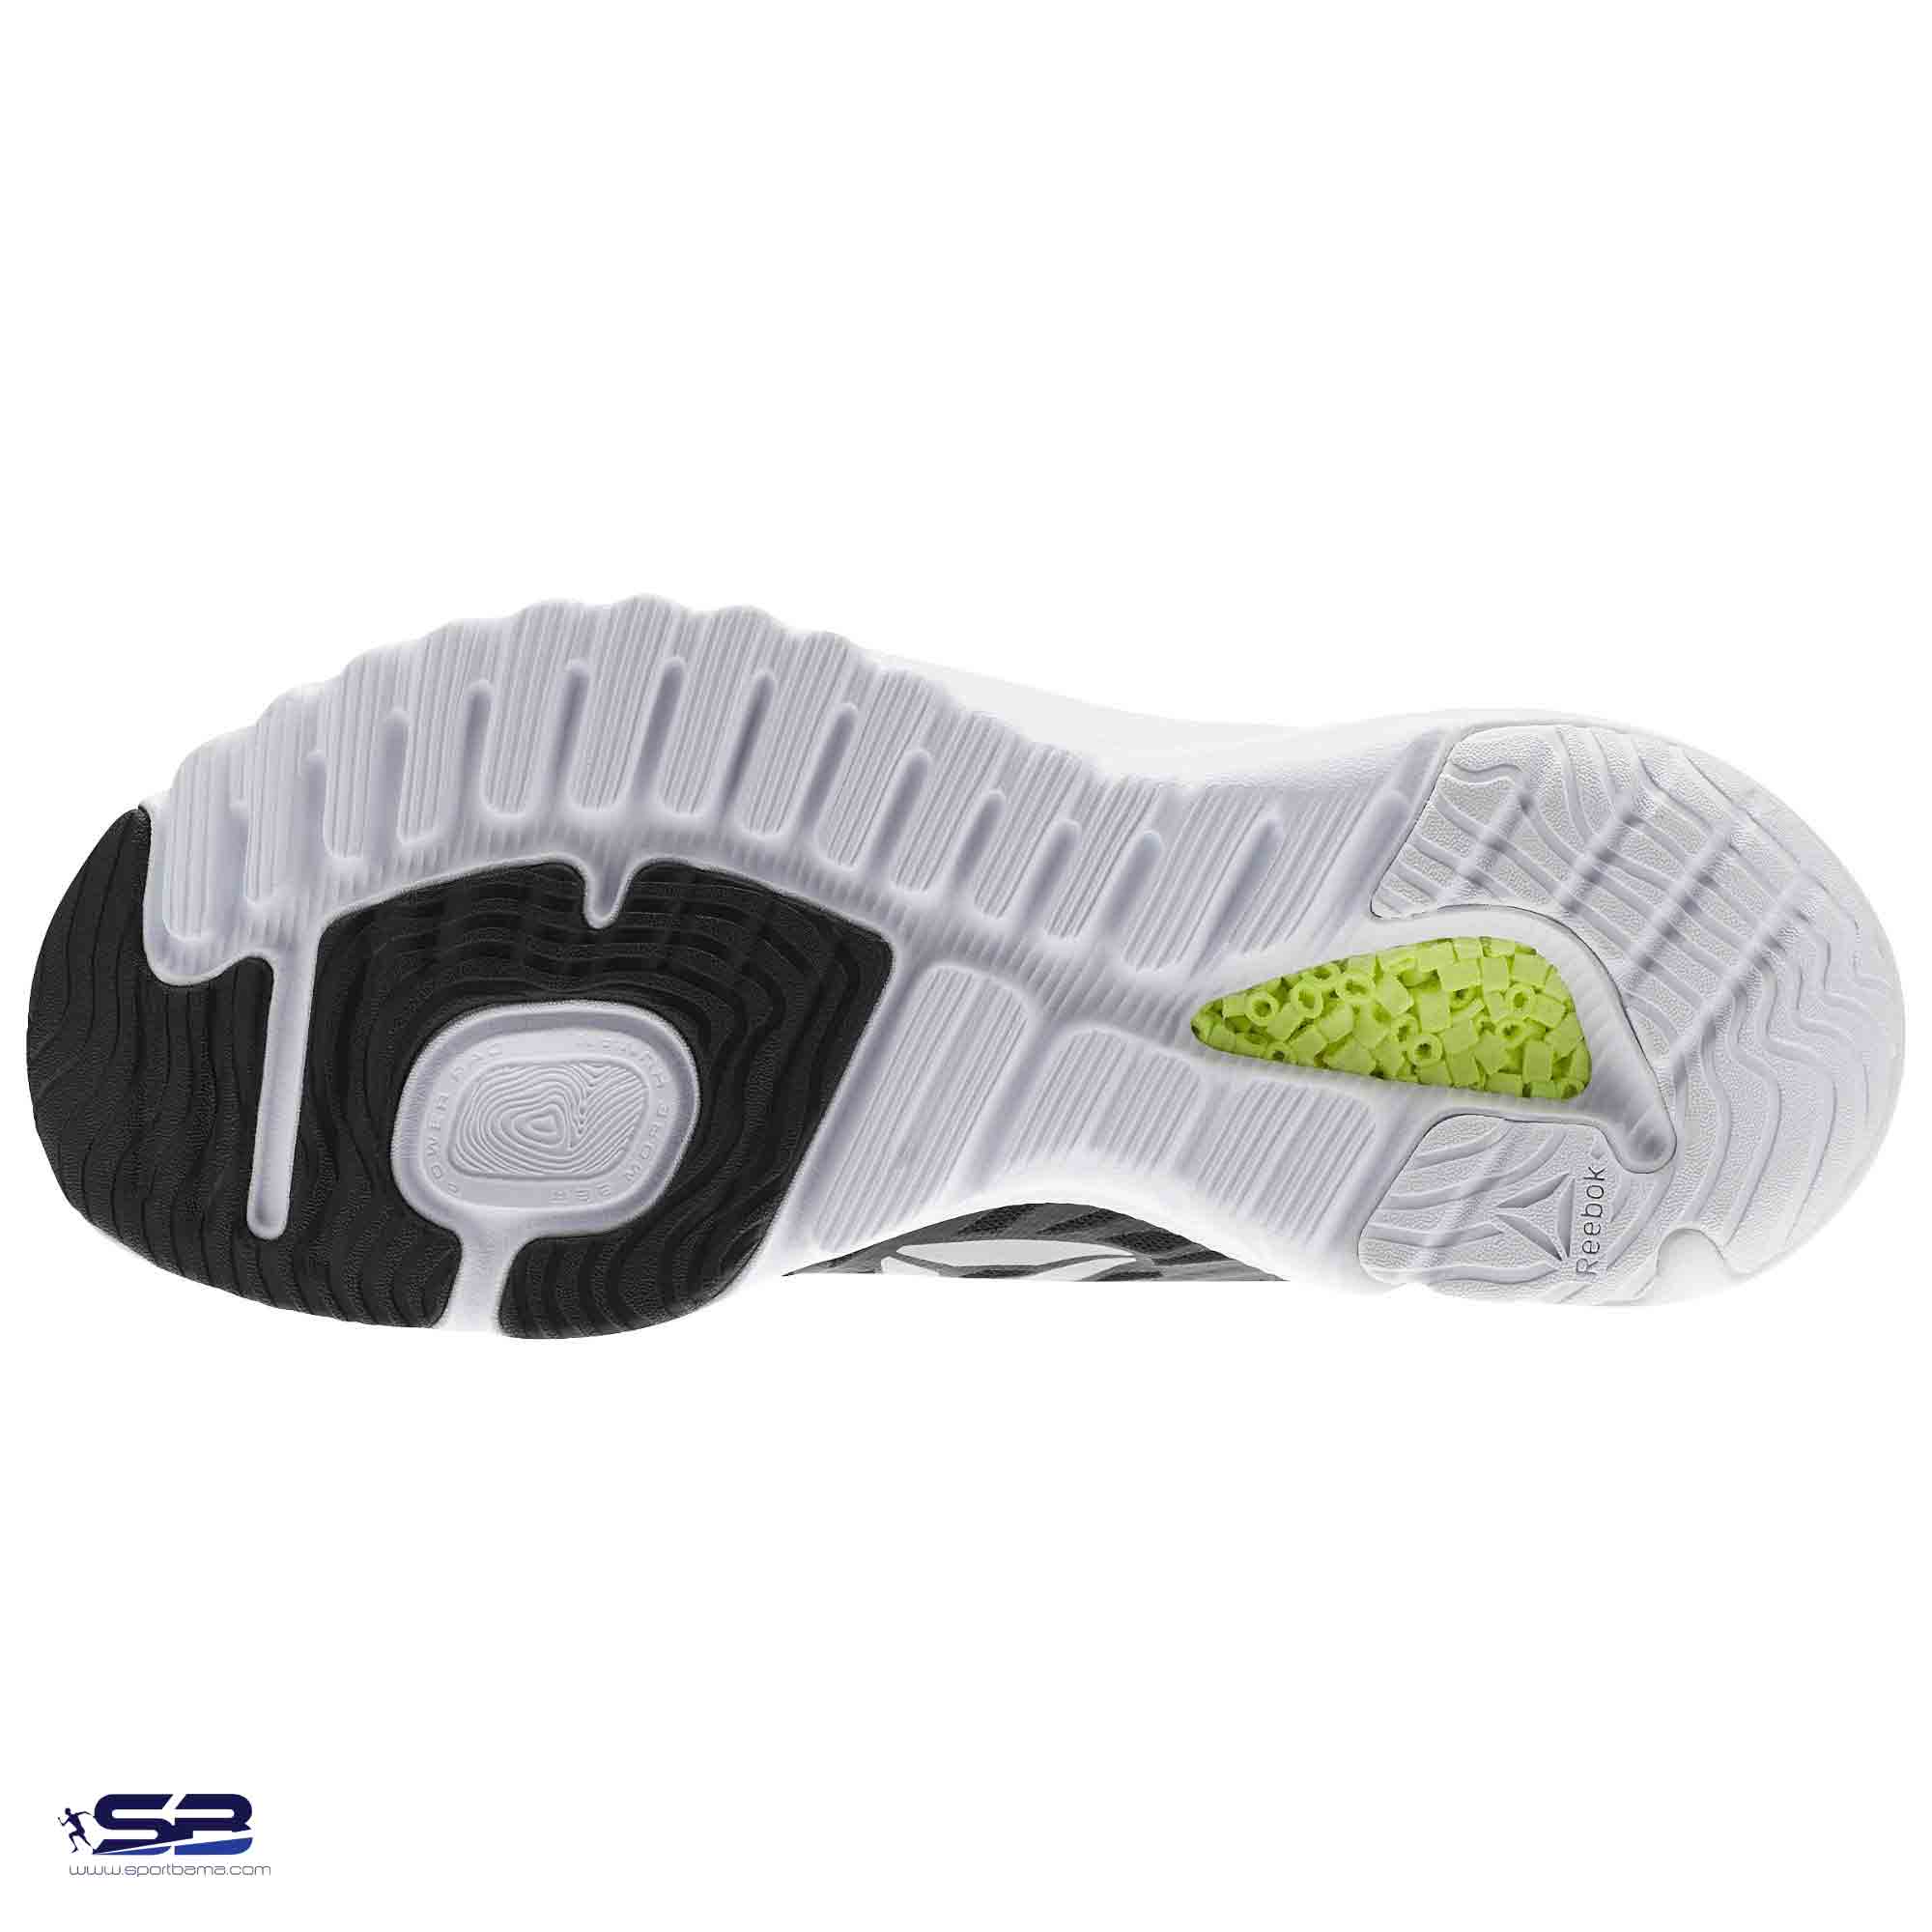  خرید  کفش کتانی اورجینال ریباک     Reebok Running Shoes BS5391  